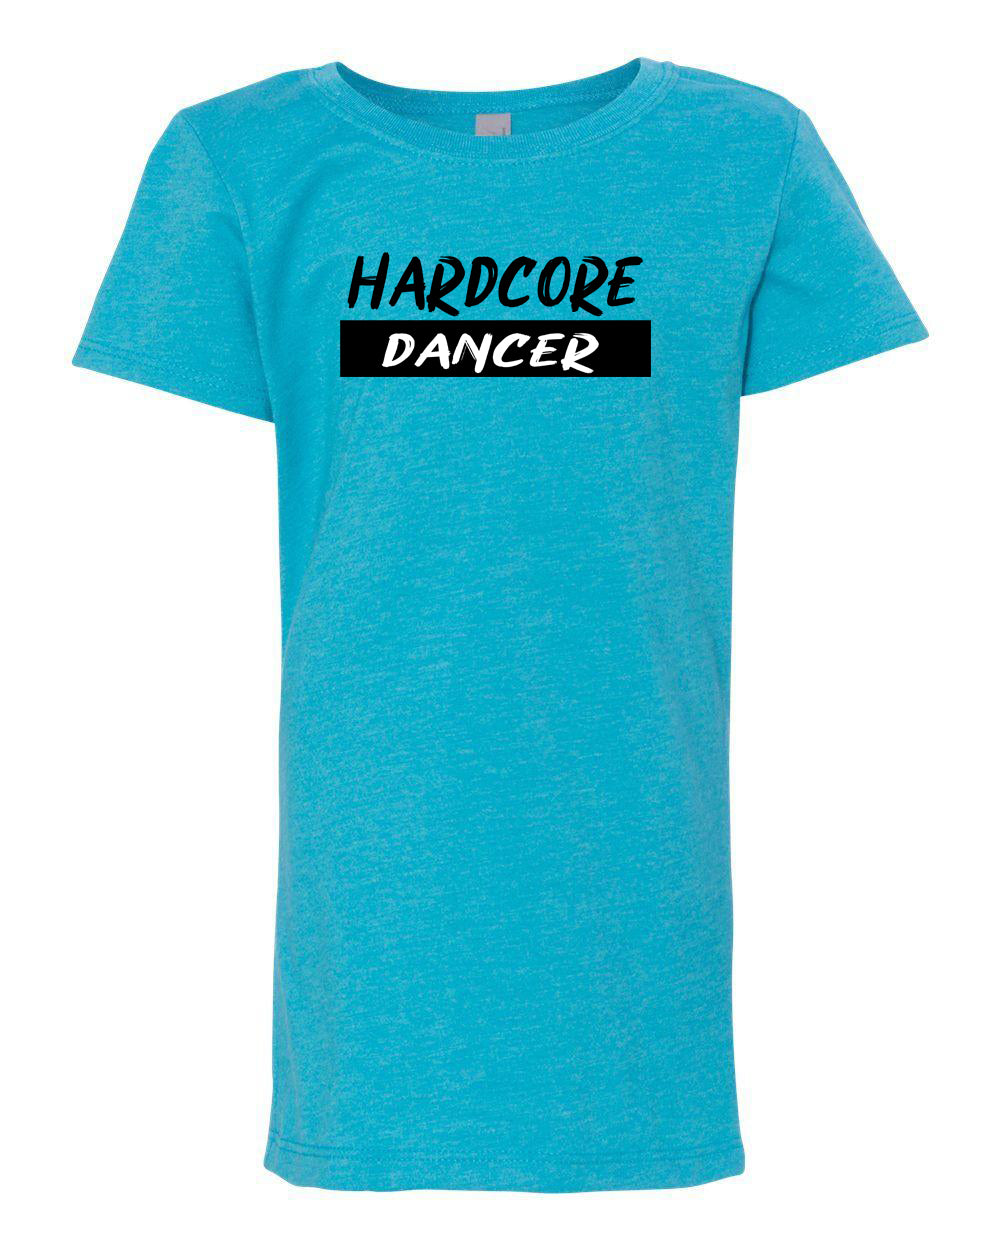 Hardcore Dancer Girls T-Shirt Ocean Blue